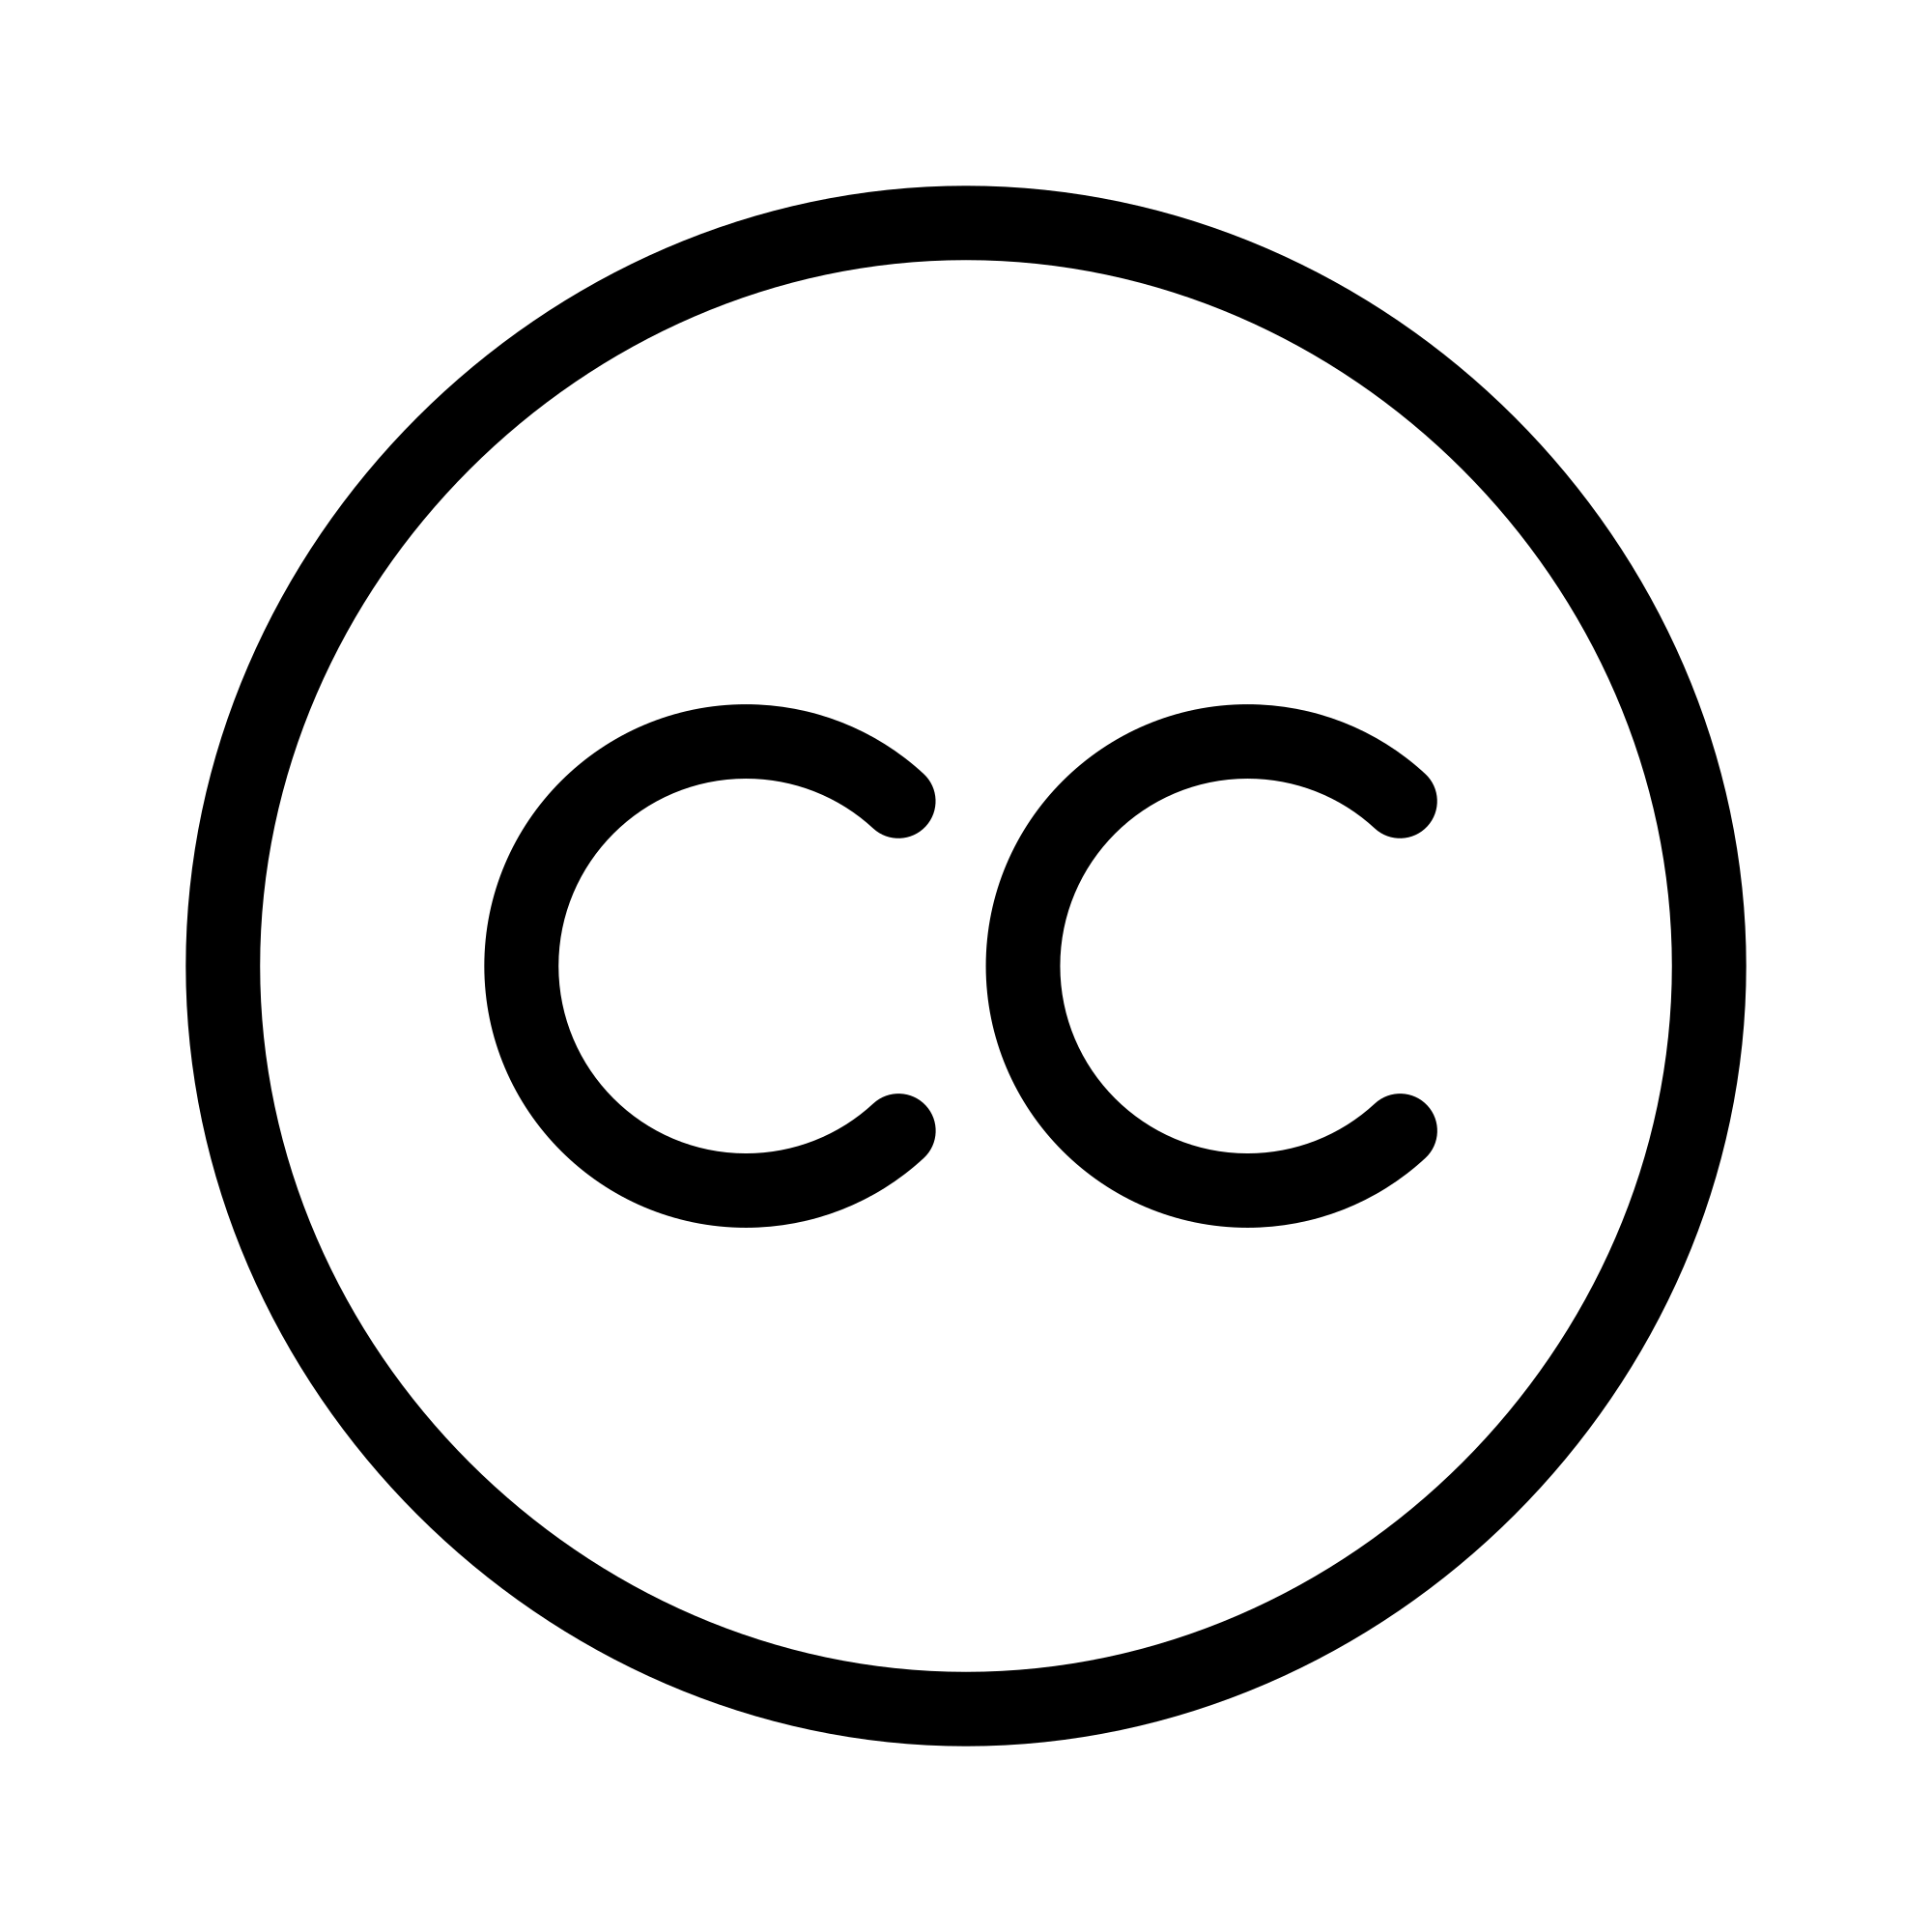 Creative Commons Logo - Noun Project Creative Commons logo 70967 cc.svg